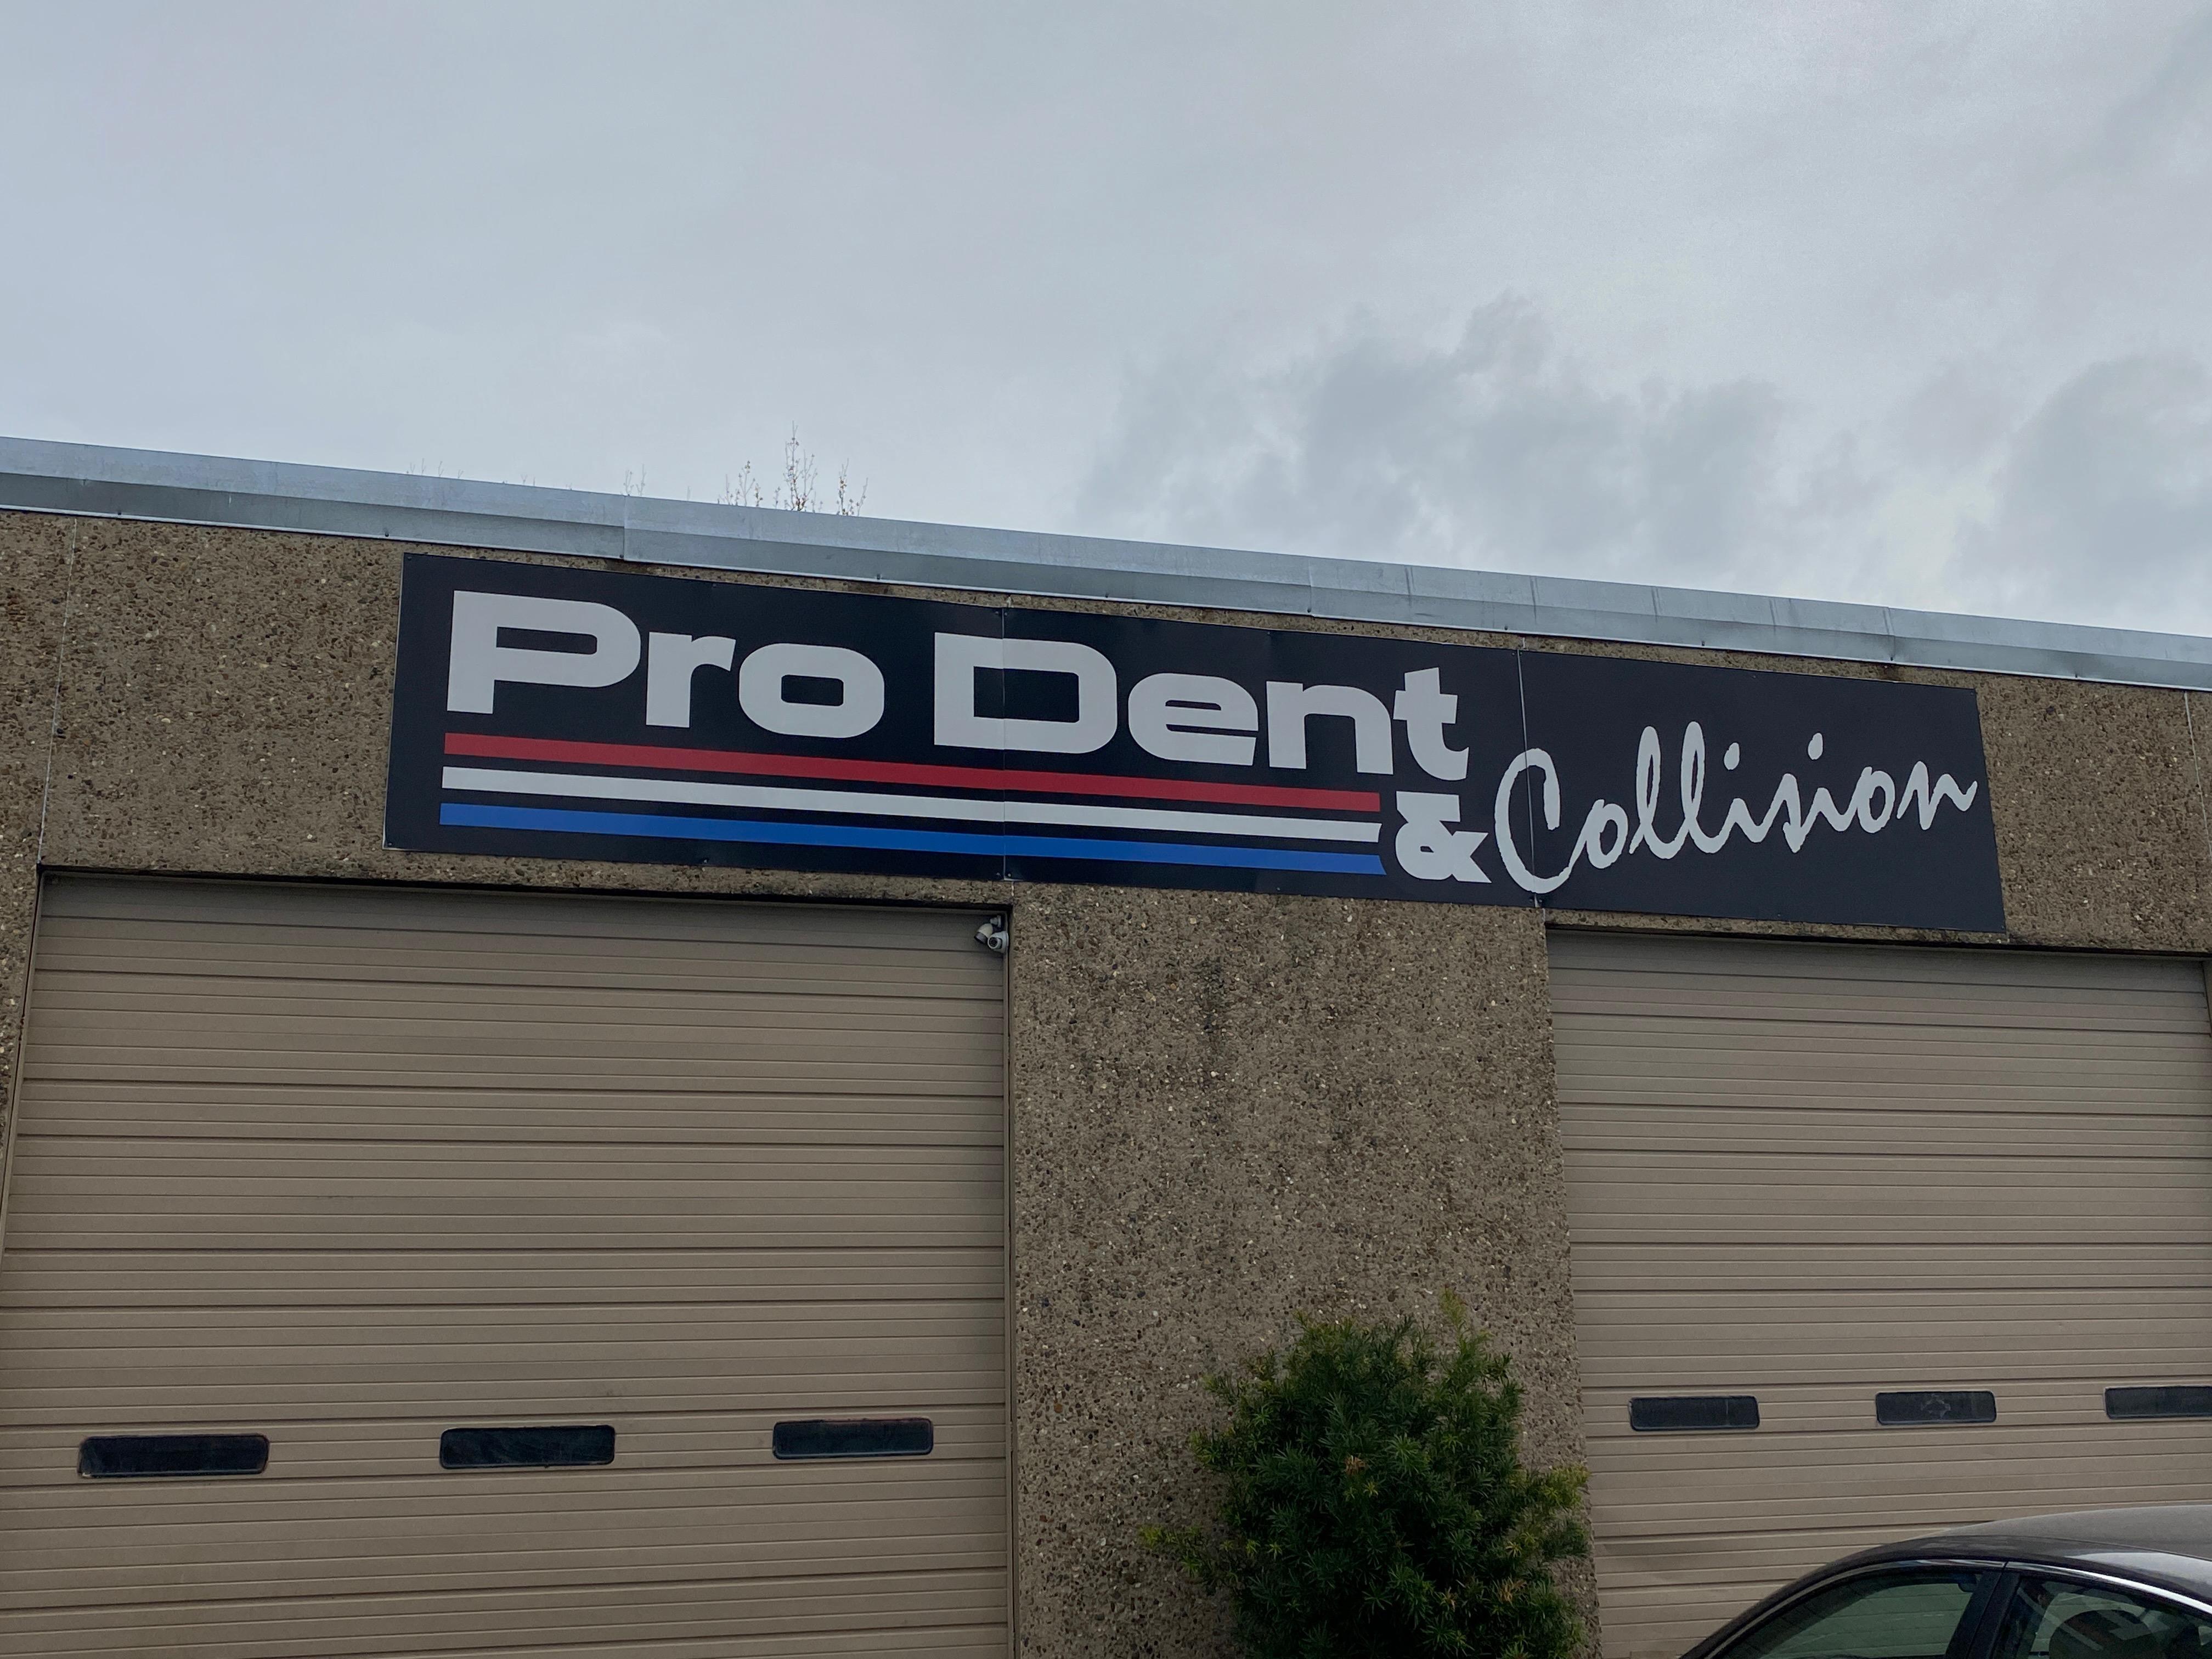 Pro Dent & Collision 208 Brockington Rd, Sherwood, AR 72120